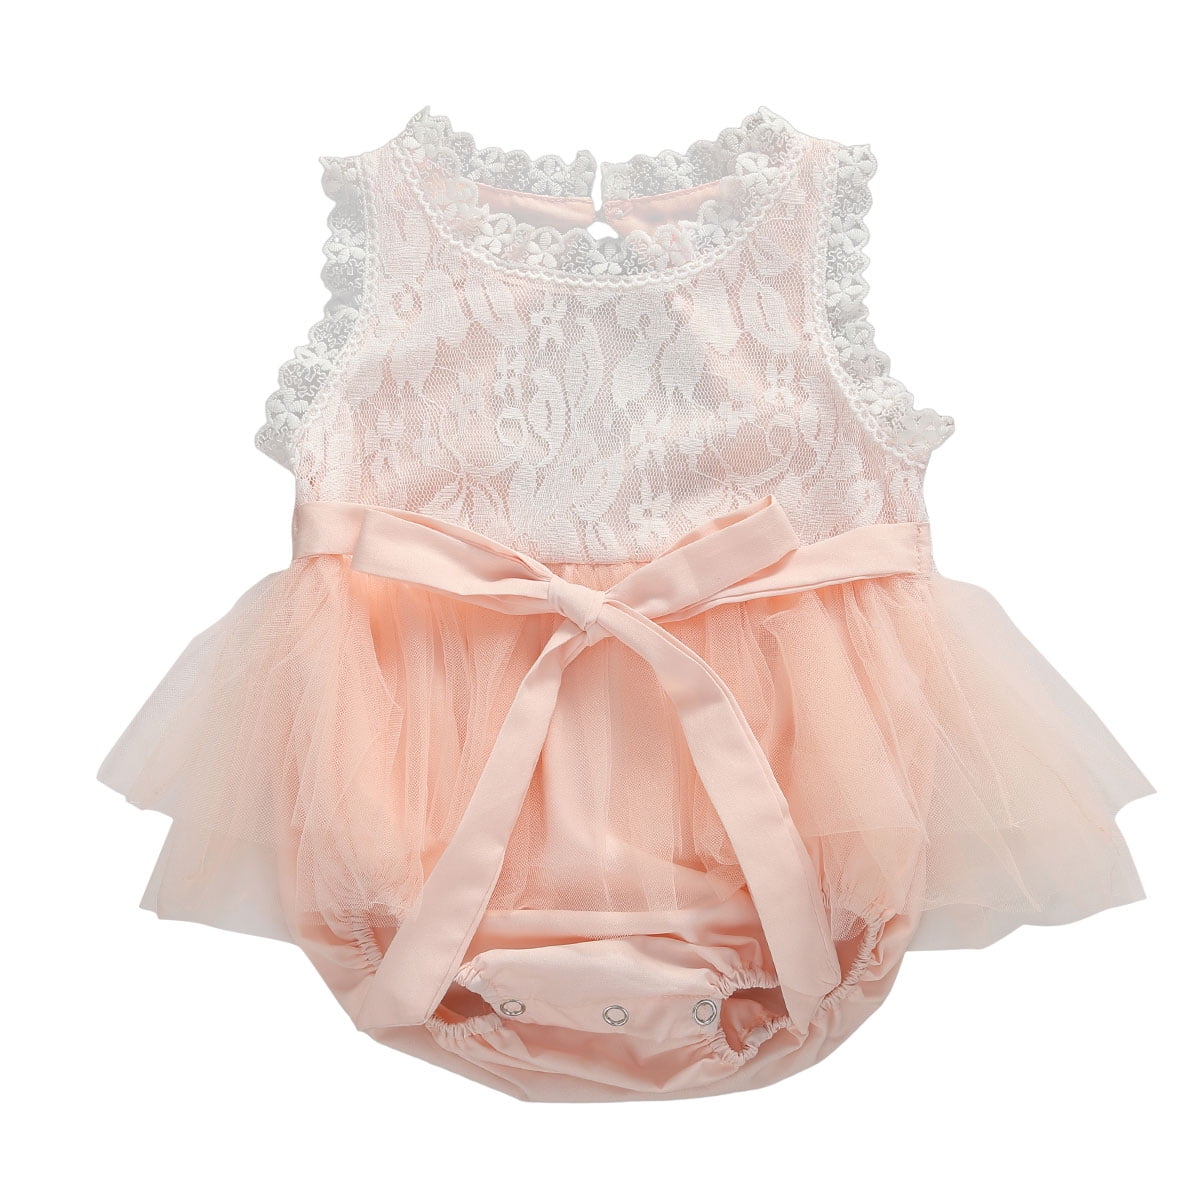 Lace Newborn Infant Baby Girl Tutu Tulle Romper Jumpsuit Bodysuit Outfit Clothes 